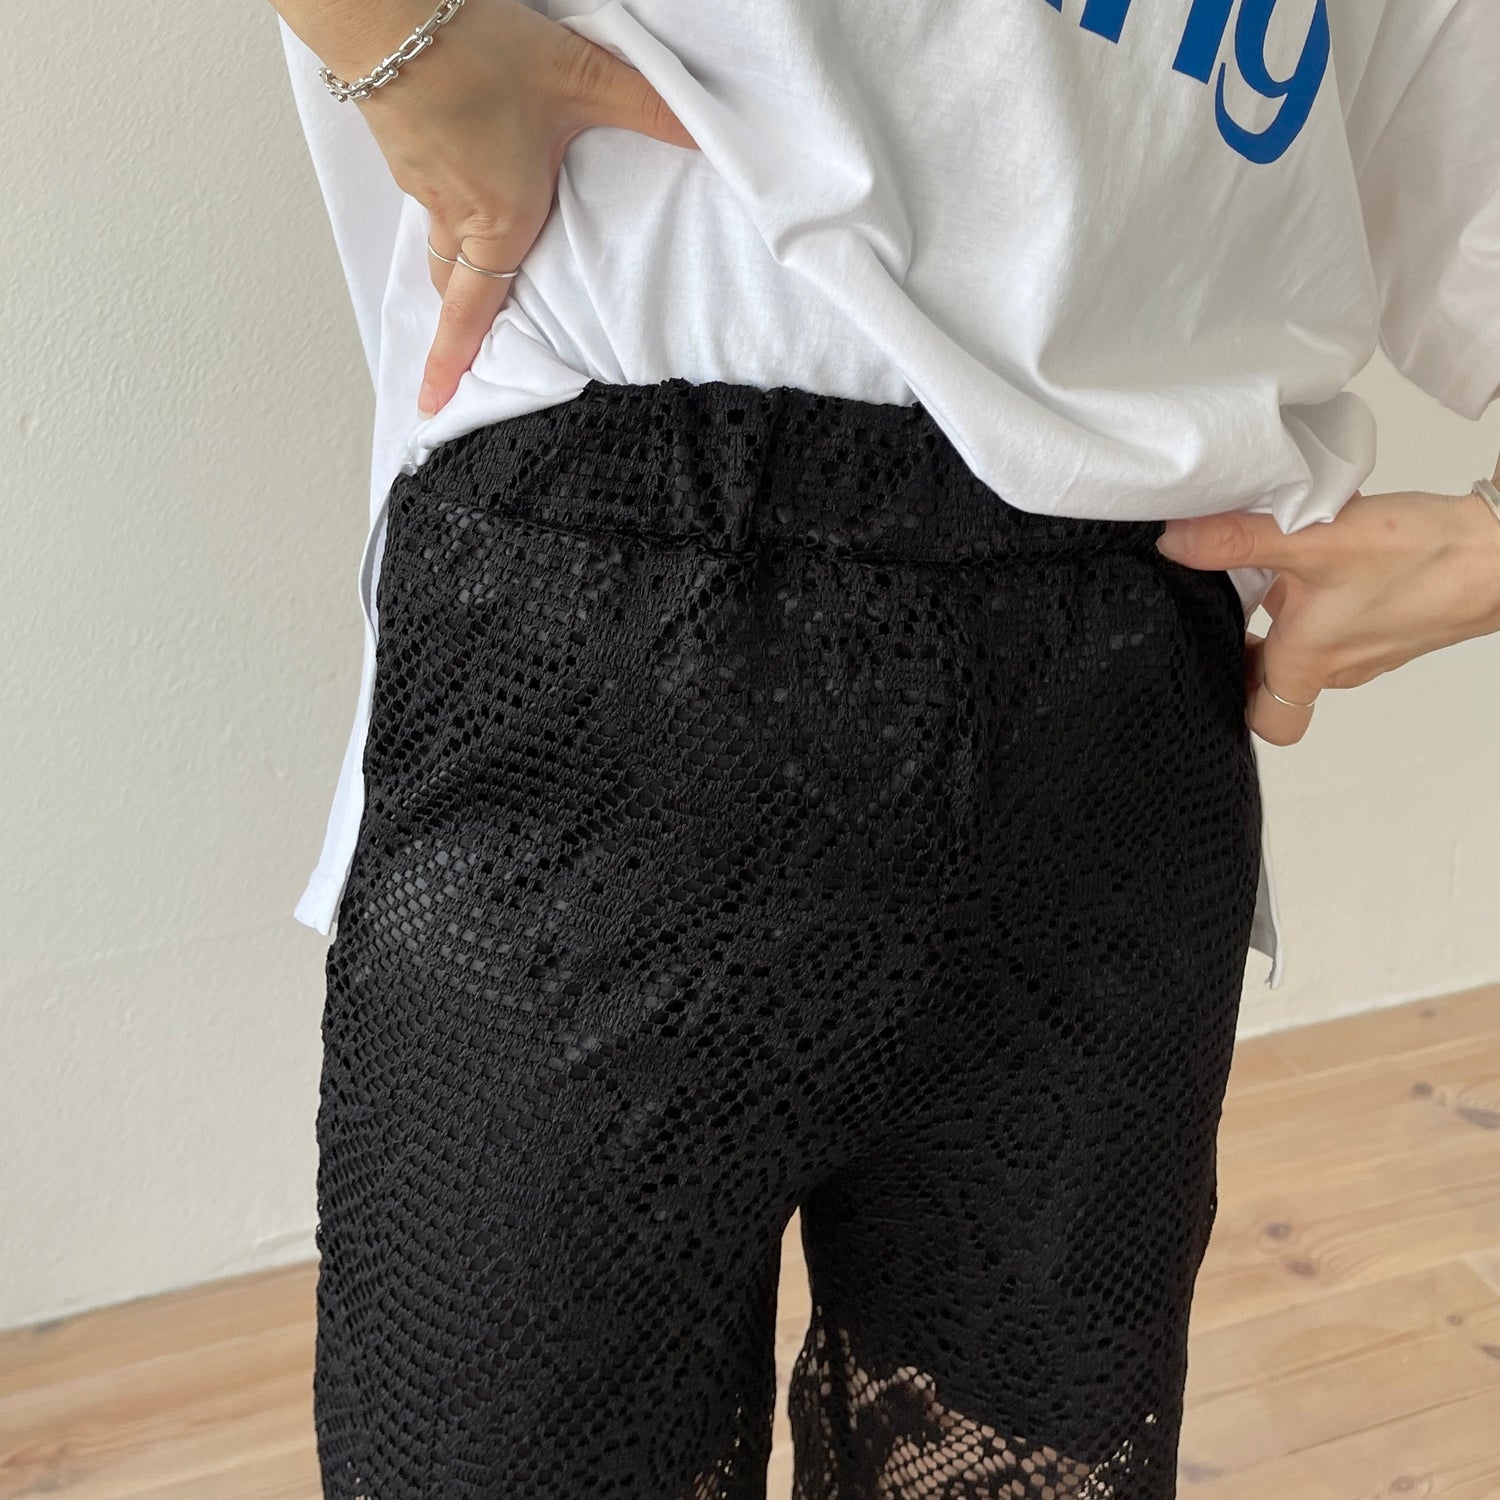 【SAMPLE】lace leggings inner pants / black